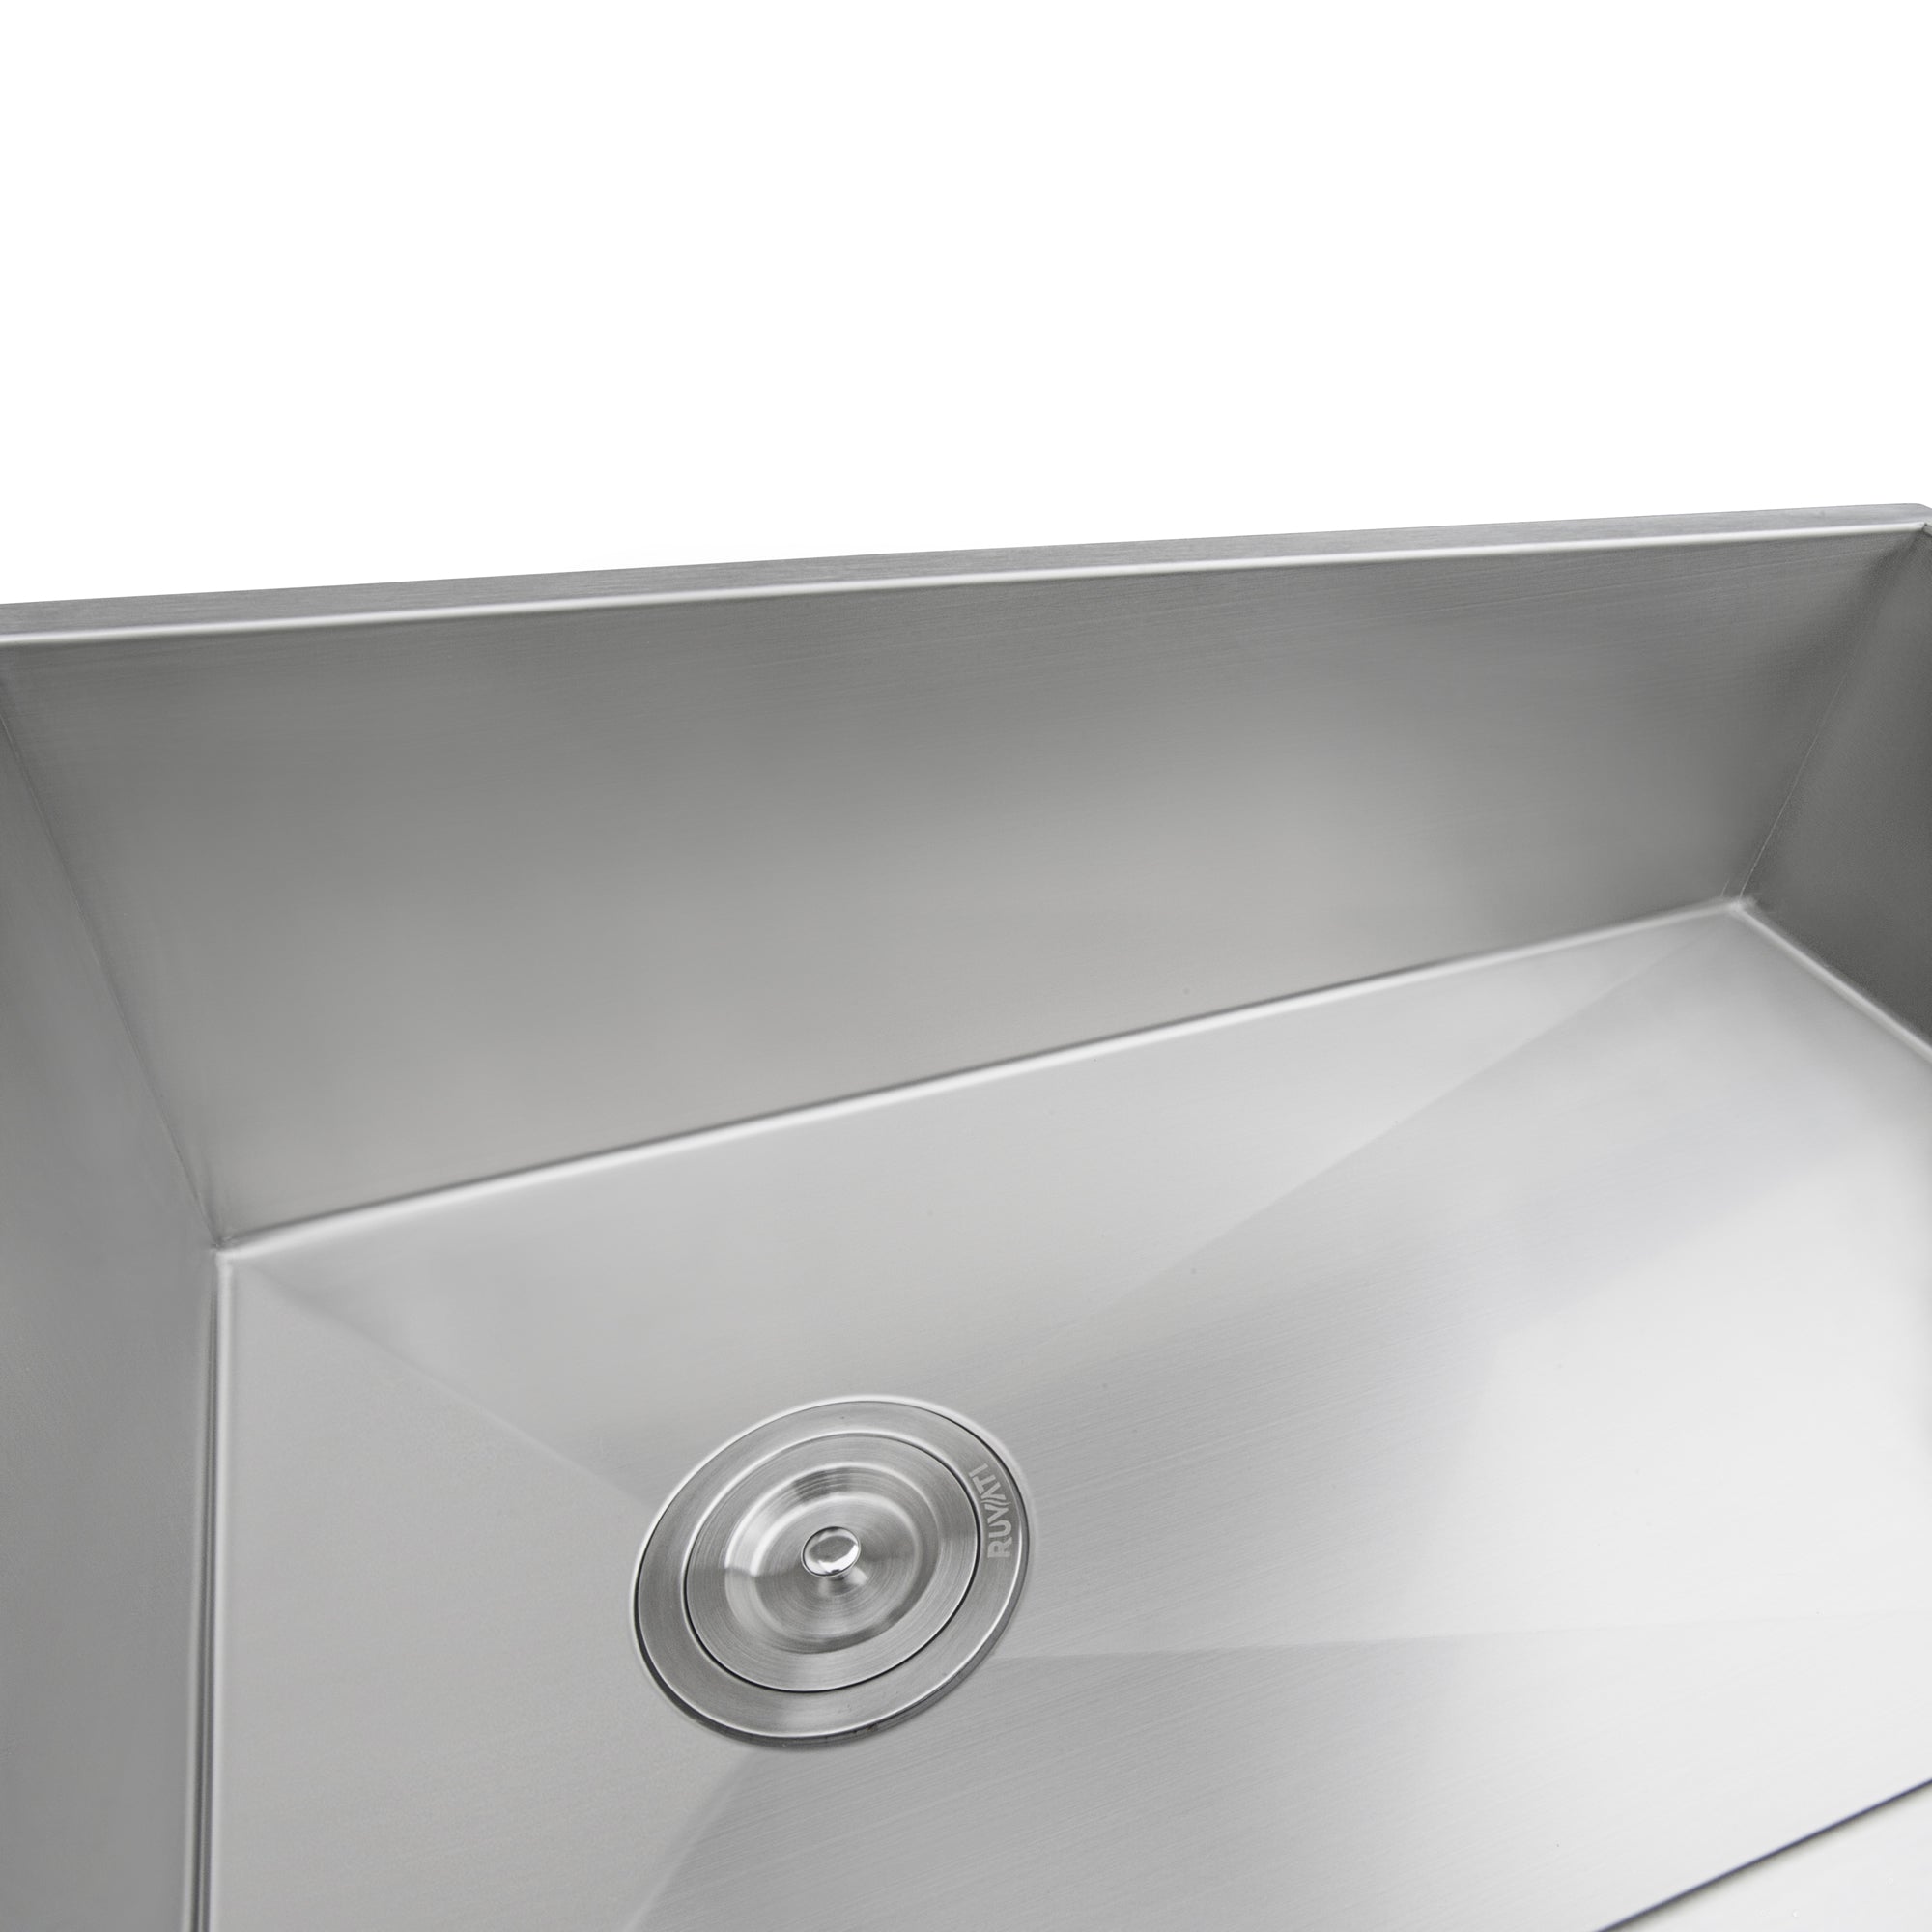 32-inch Offset Drain Sloped Bottom Undermount Kitchen Sink Single Bowl Stainless Steel